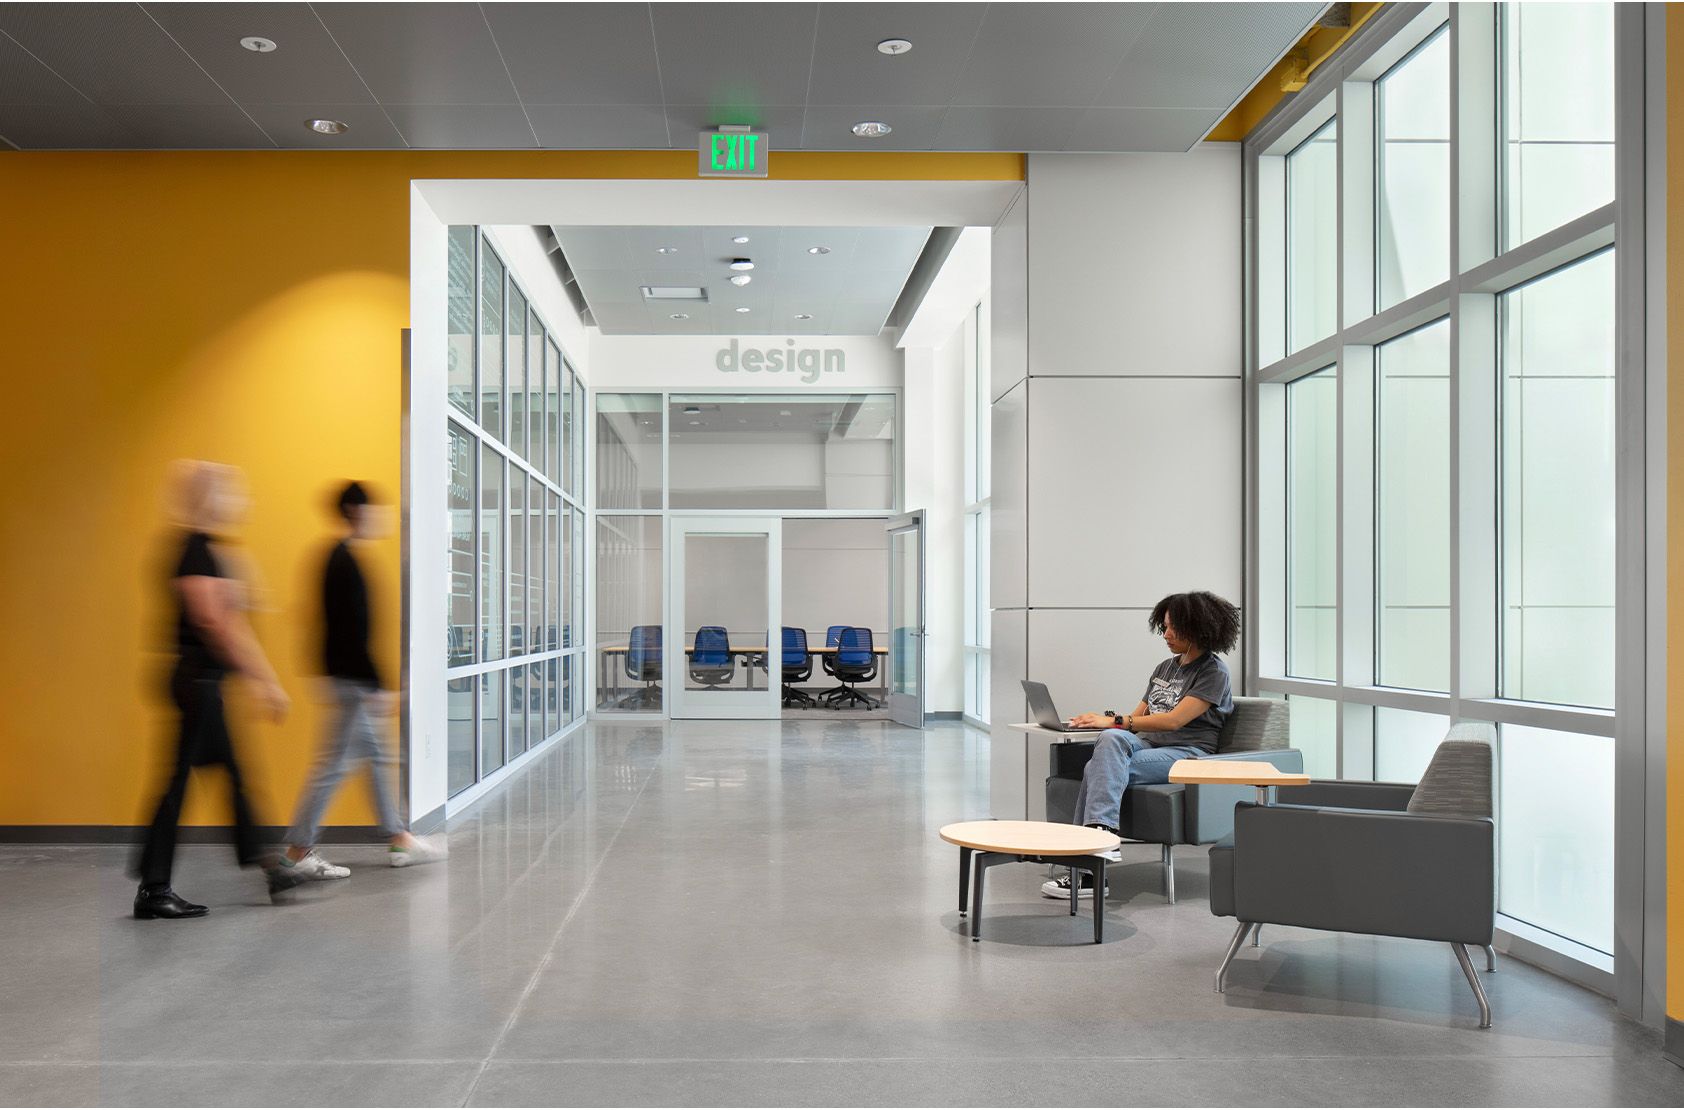 University of California, Davis - Engineering Student Design Center